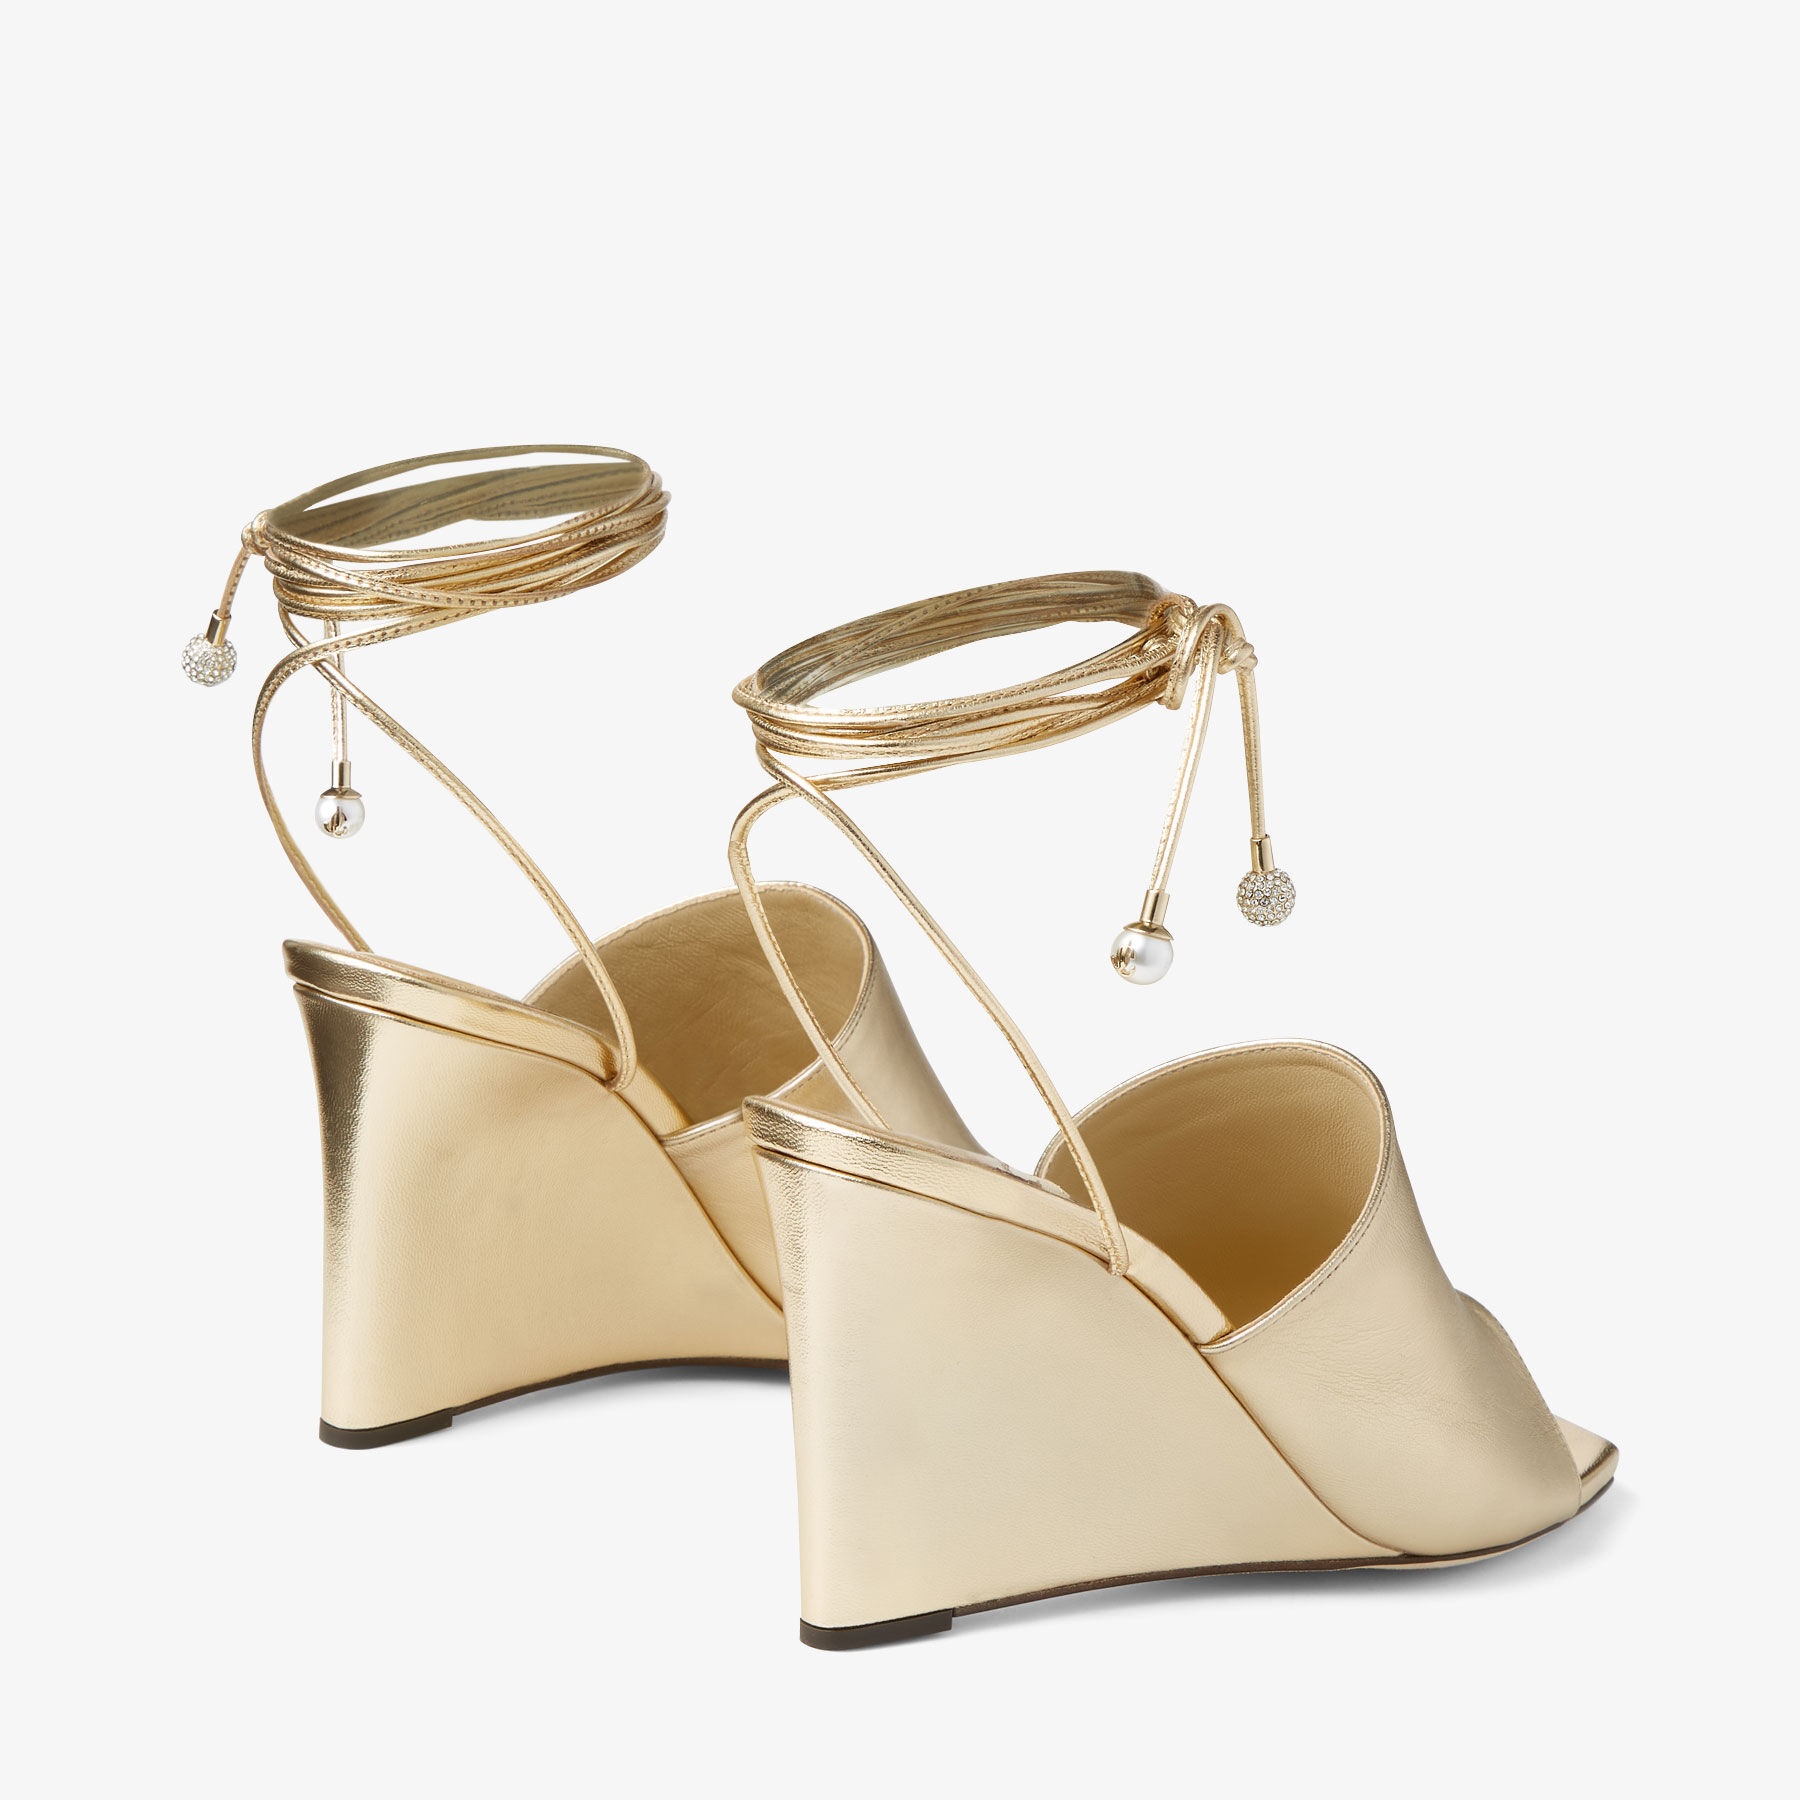 Elyna 85
Gold Metallic Nappa Wedge Sandals - 6